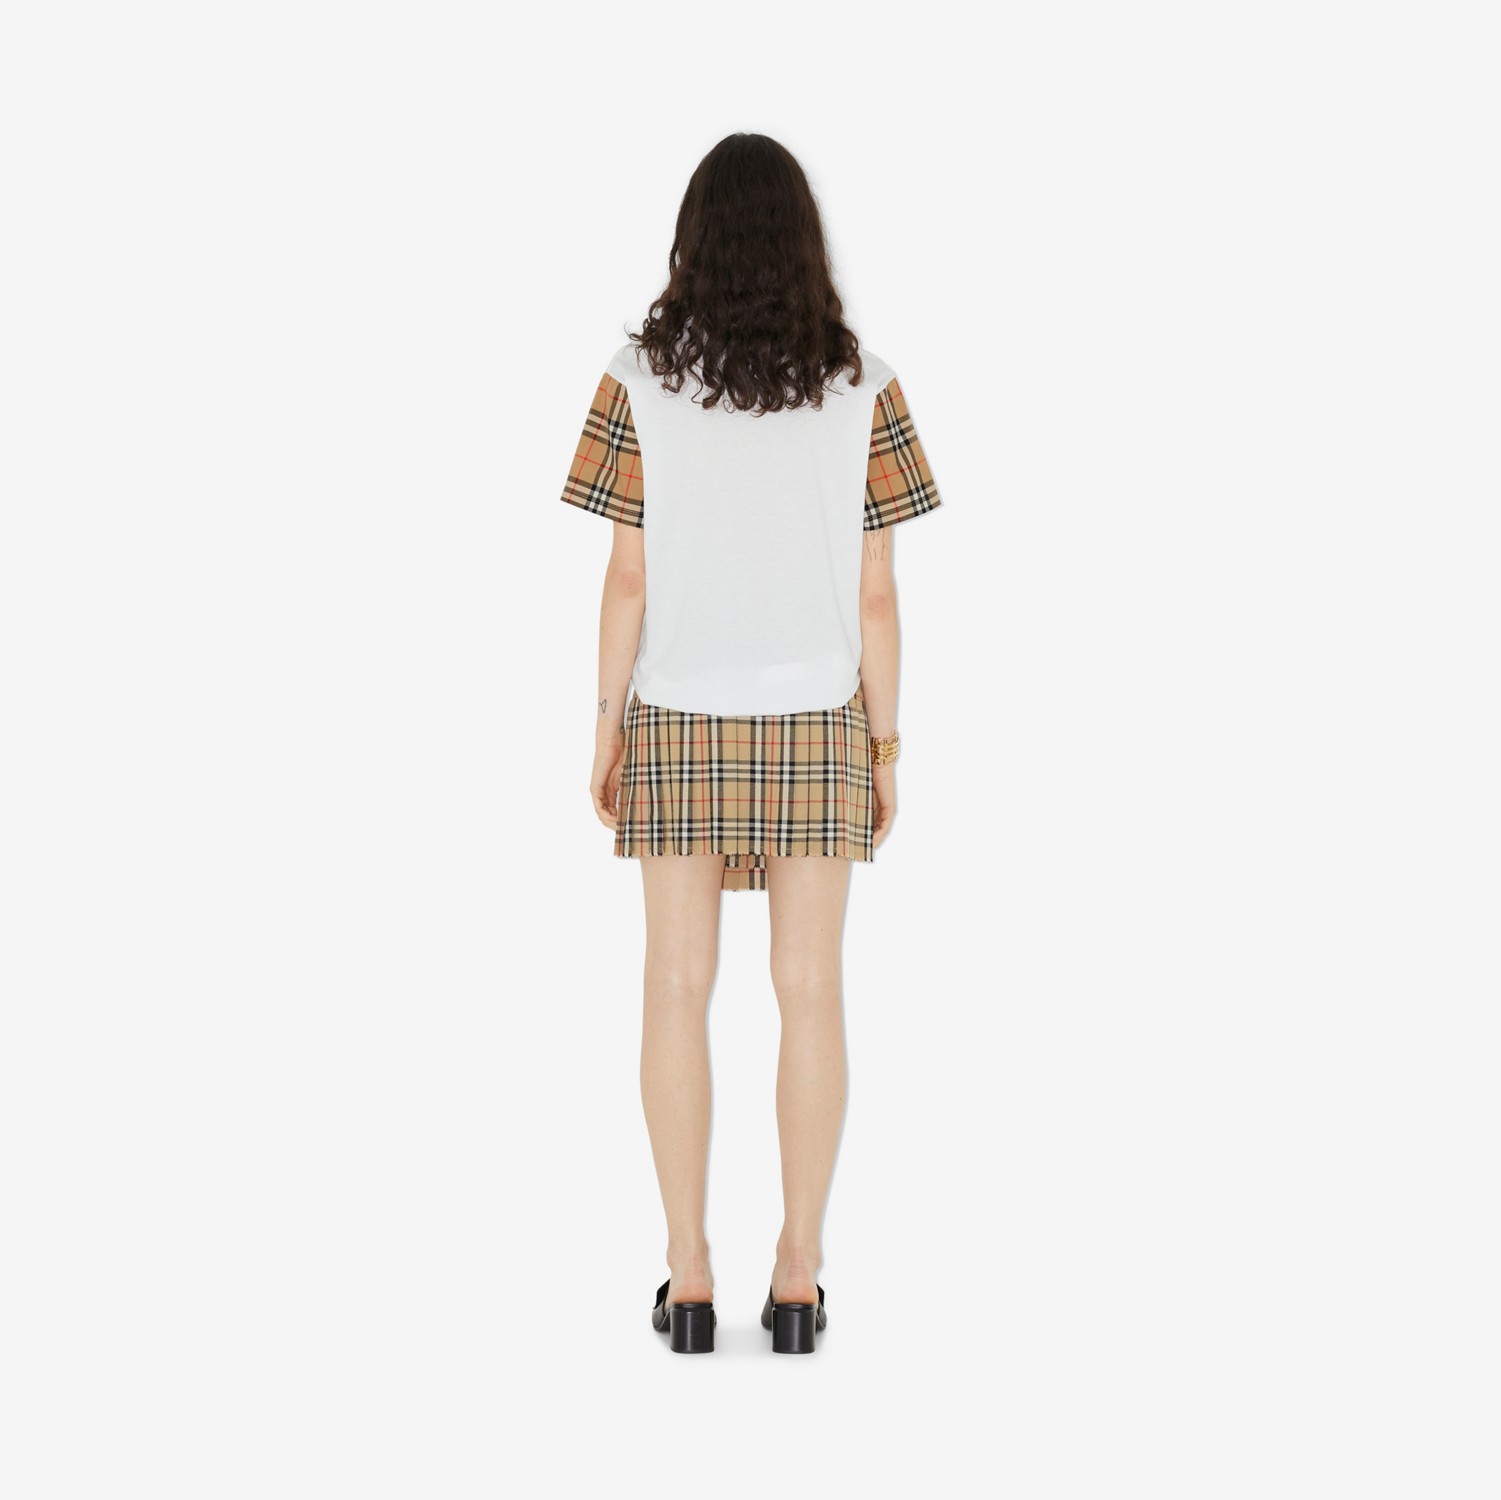 Baumwoll-T-Shirt mit Check-Ärmeln (Weiß) - Damen | Burberry®